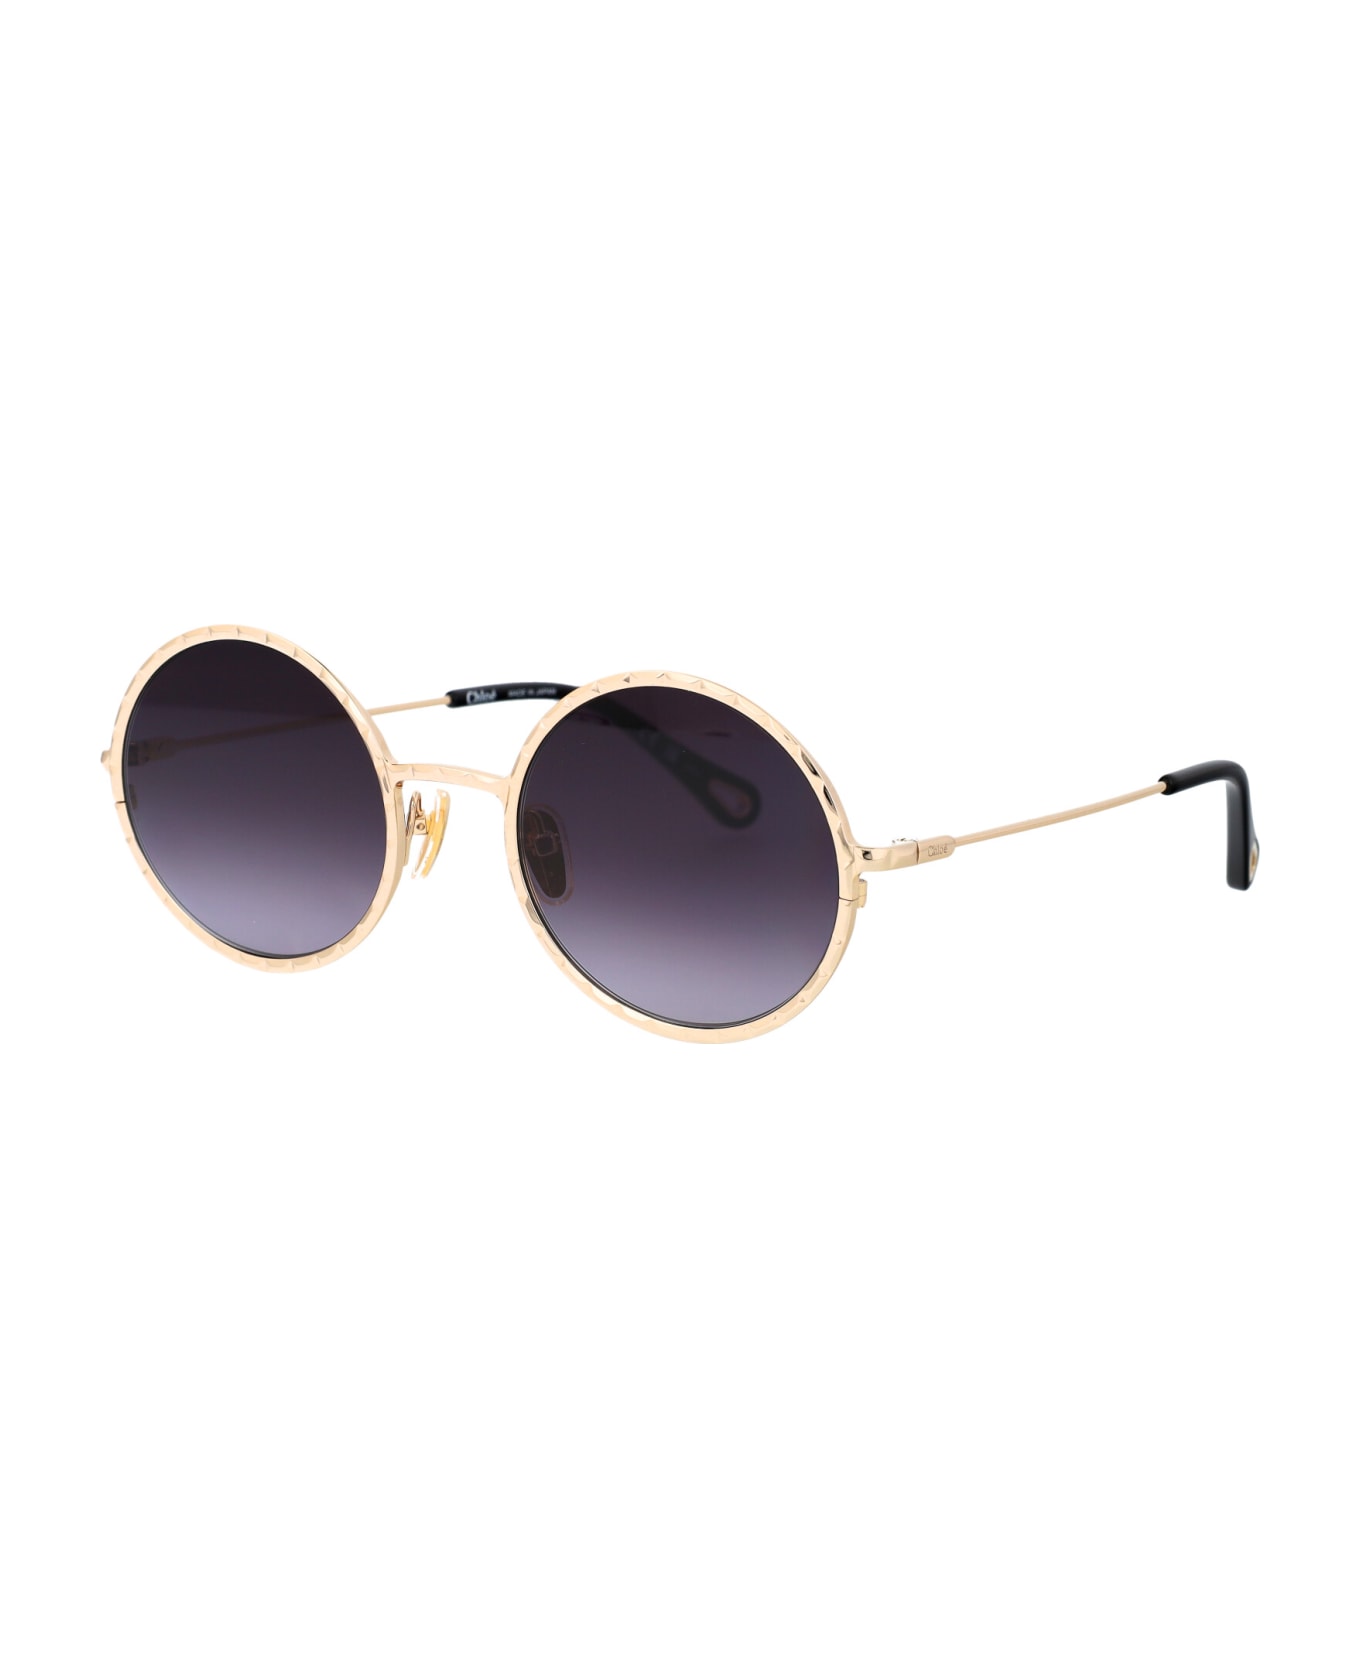 Chloé Eyewear Ch0230s Sunglasses - 001 GOLD GOLD GREY